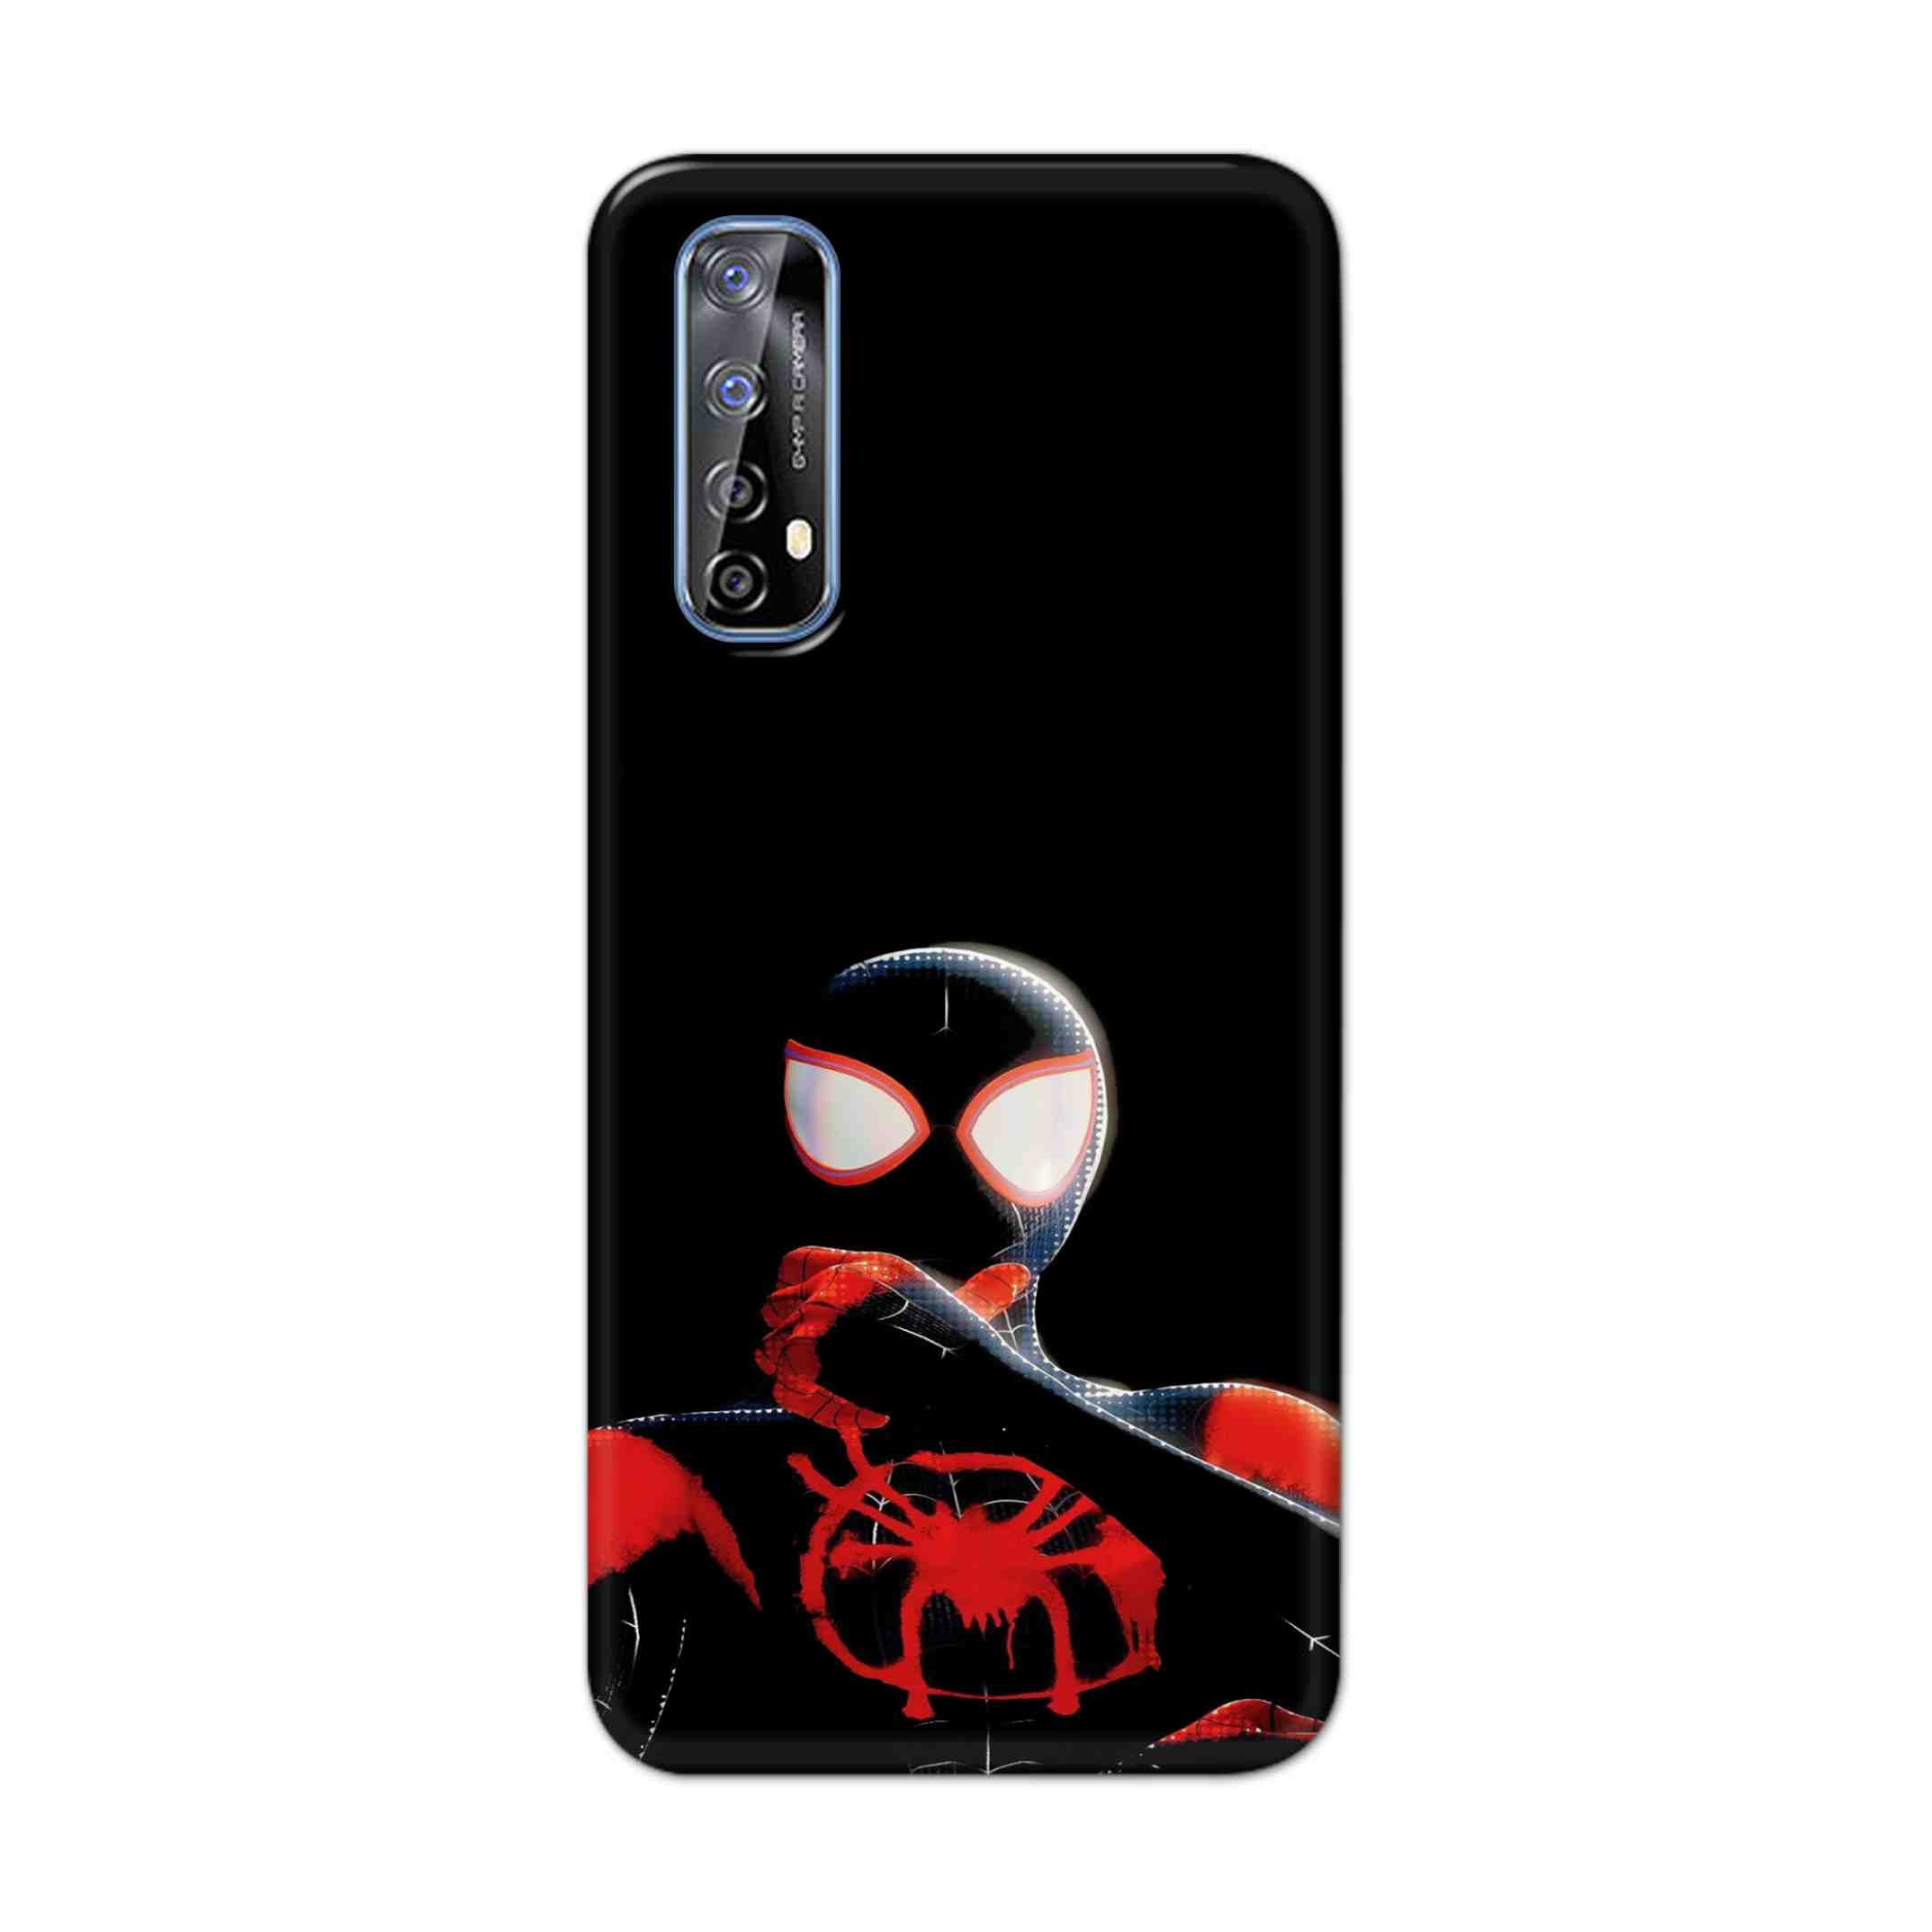 Buy Black Spiderman Hard Back Mobile Phone Case Cover For Realme 7 Online